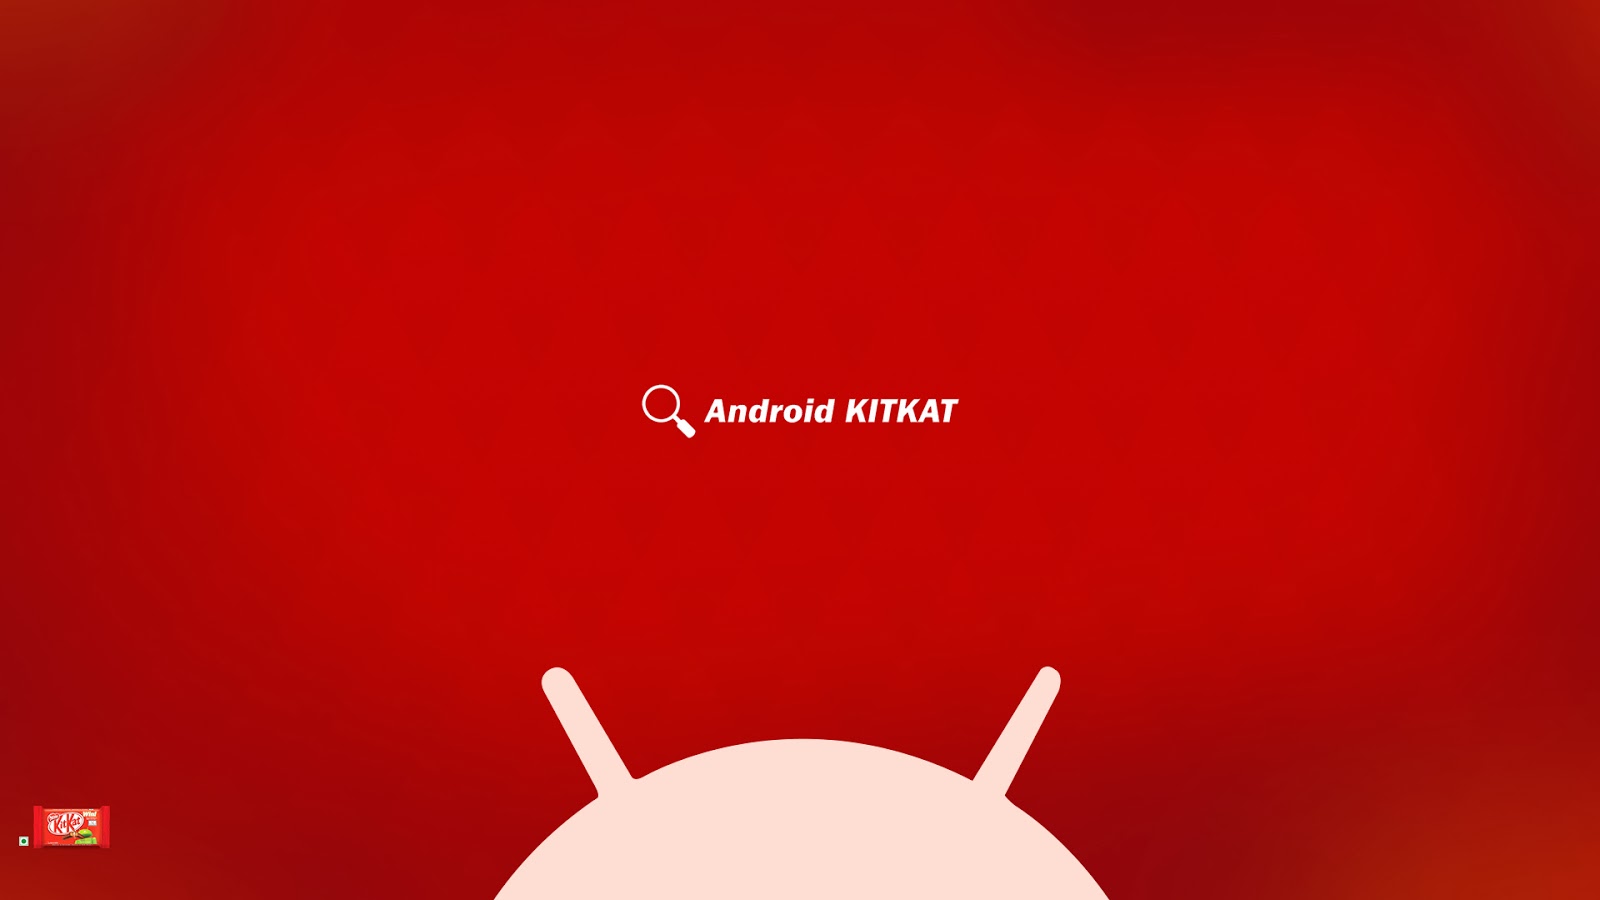 android kit kat wallpaper download